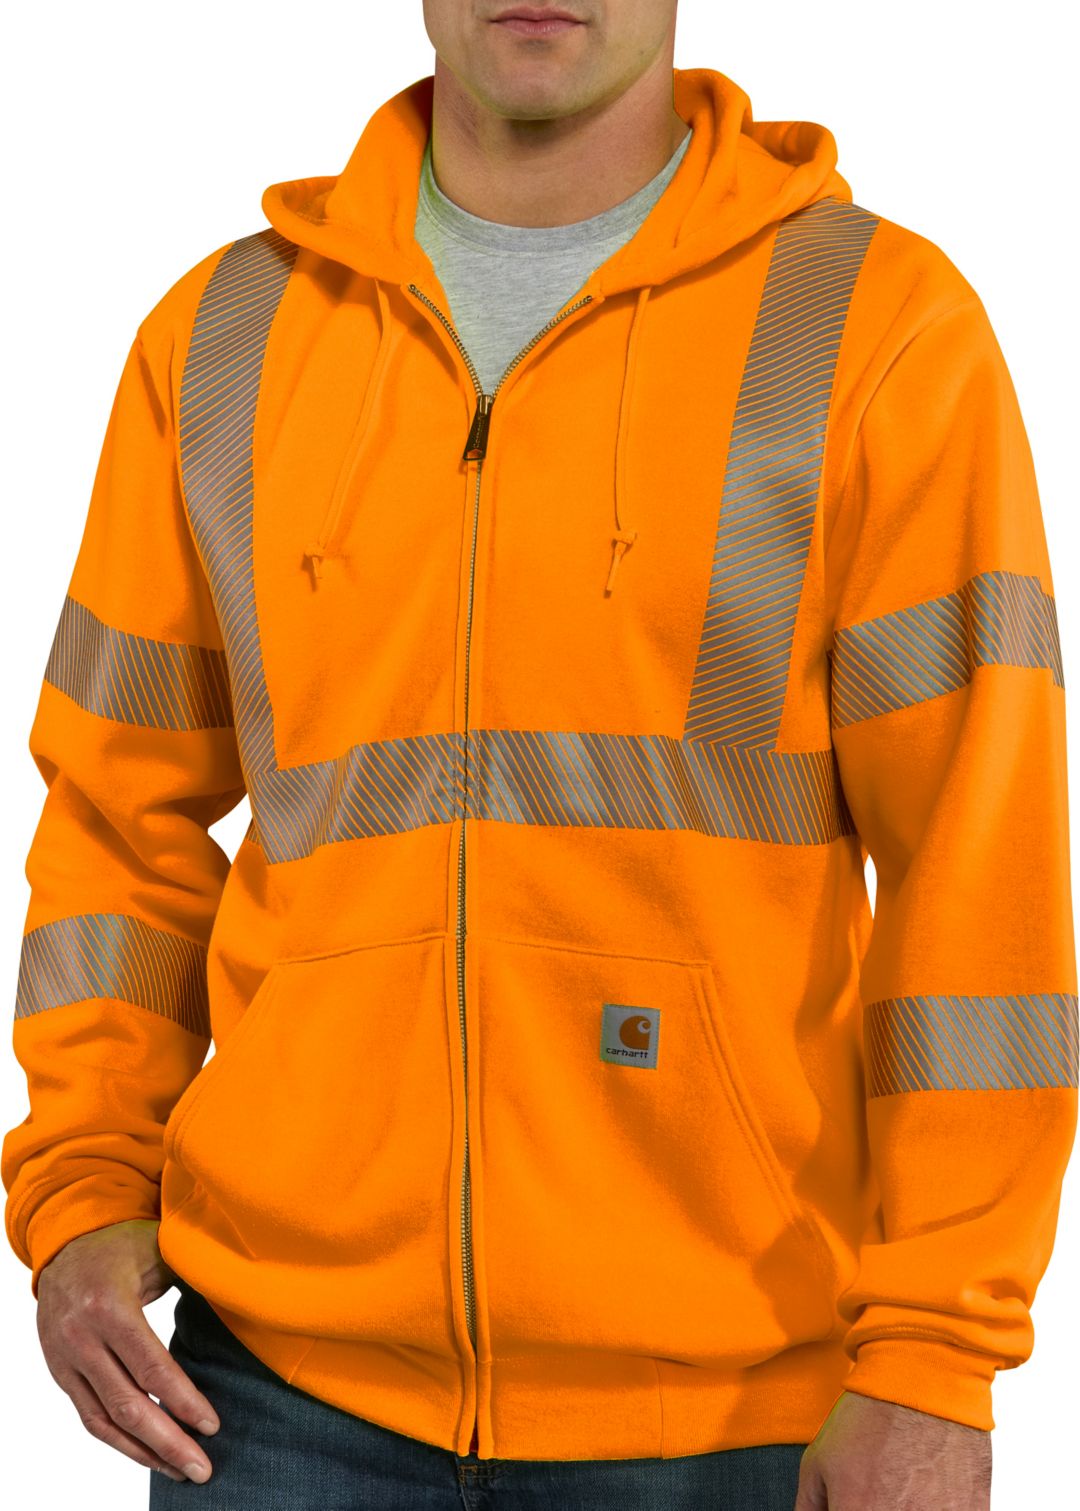 Carhartt Mens Big & Tall High Visibility Class 3 Sweatshirt Clothing ...